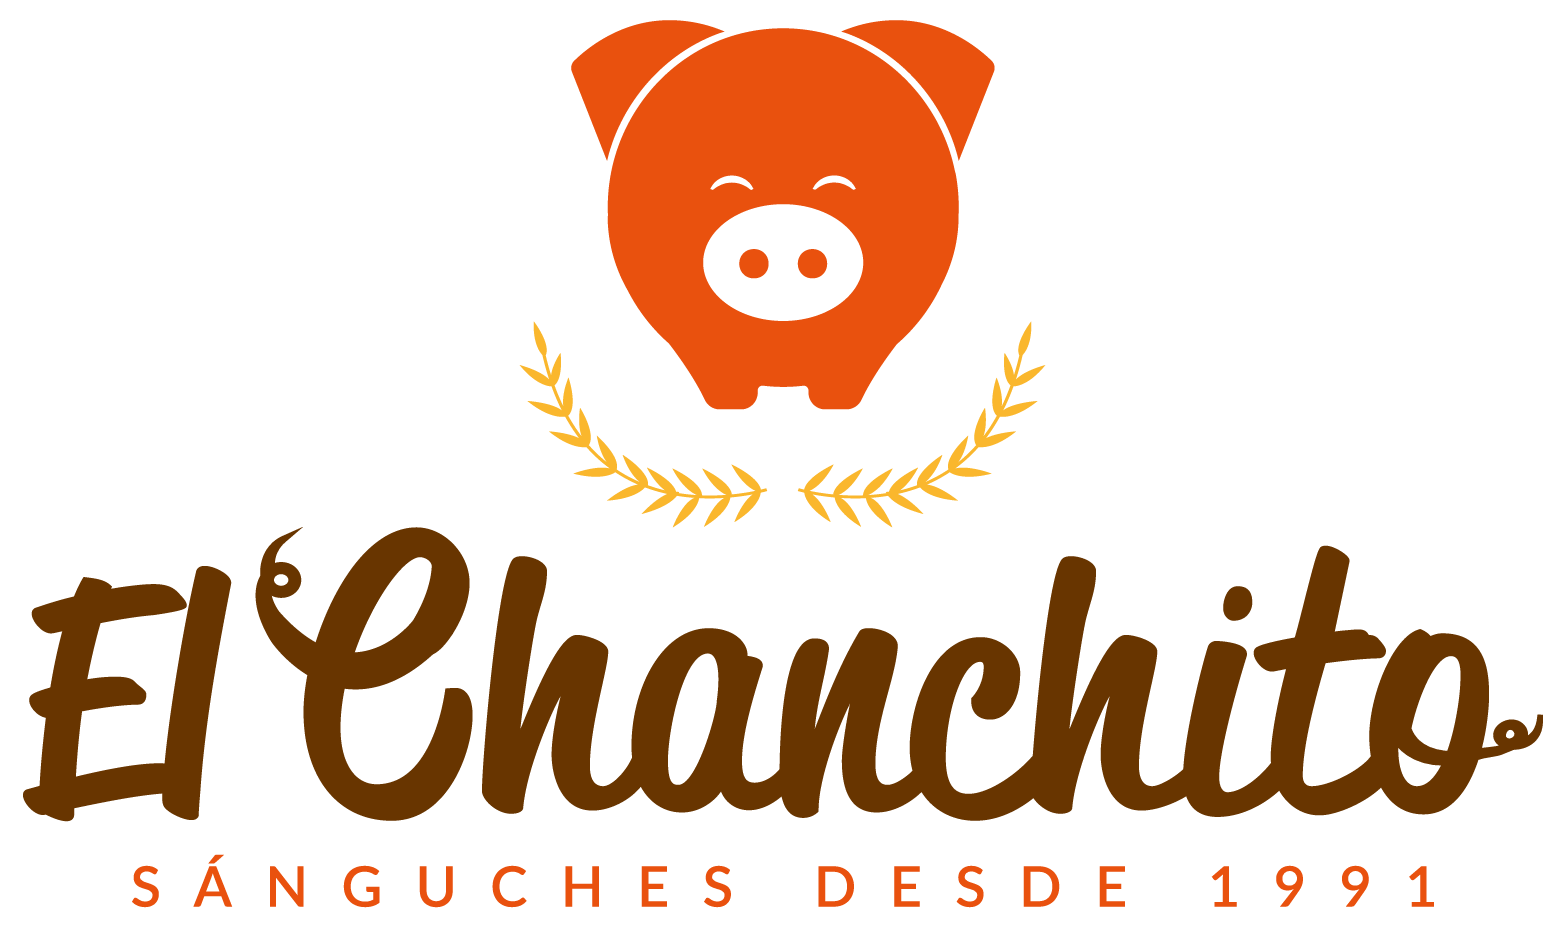 El Chanchito – Sanguches desde 1991